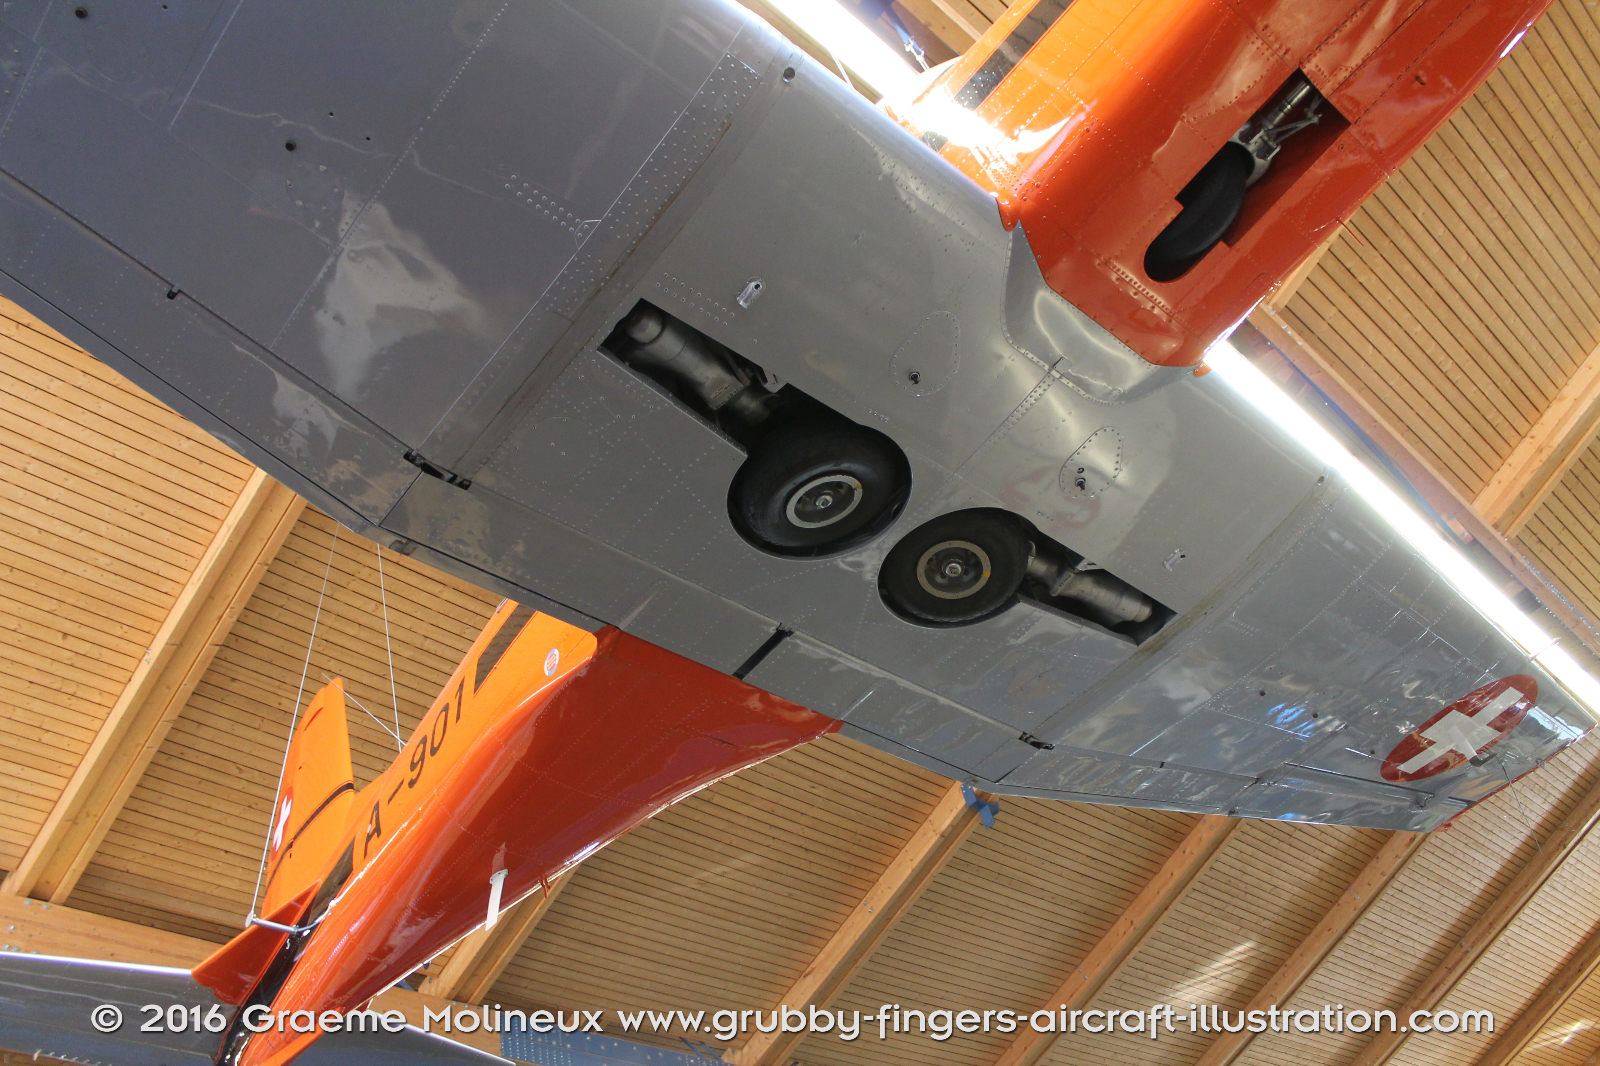 PILATUS_PC-7_A-901_Swiss_Air_Force_Museum_2015_16_GrubbyFingers